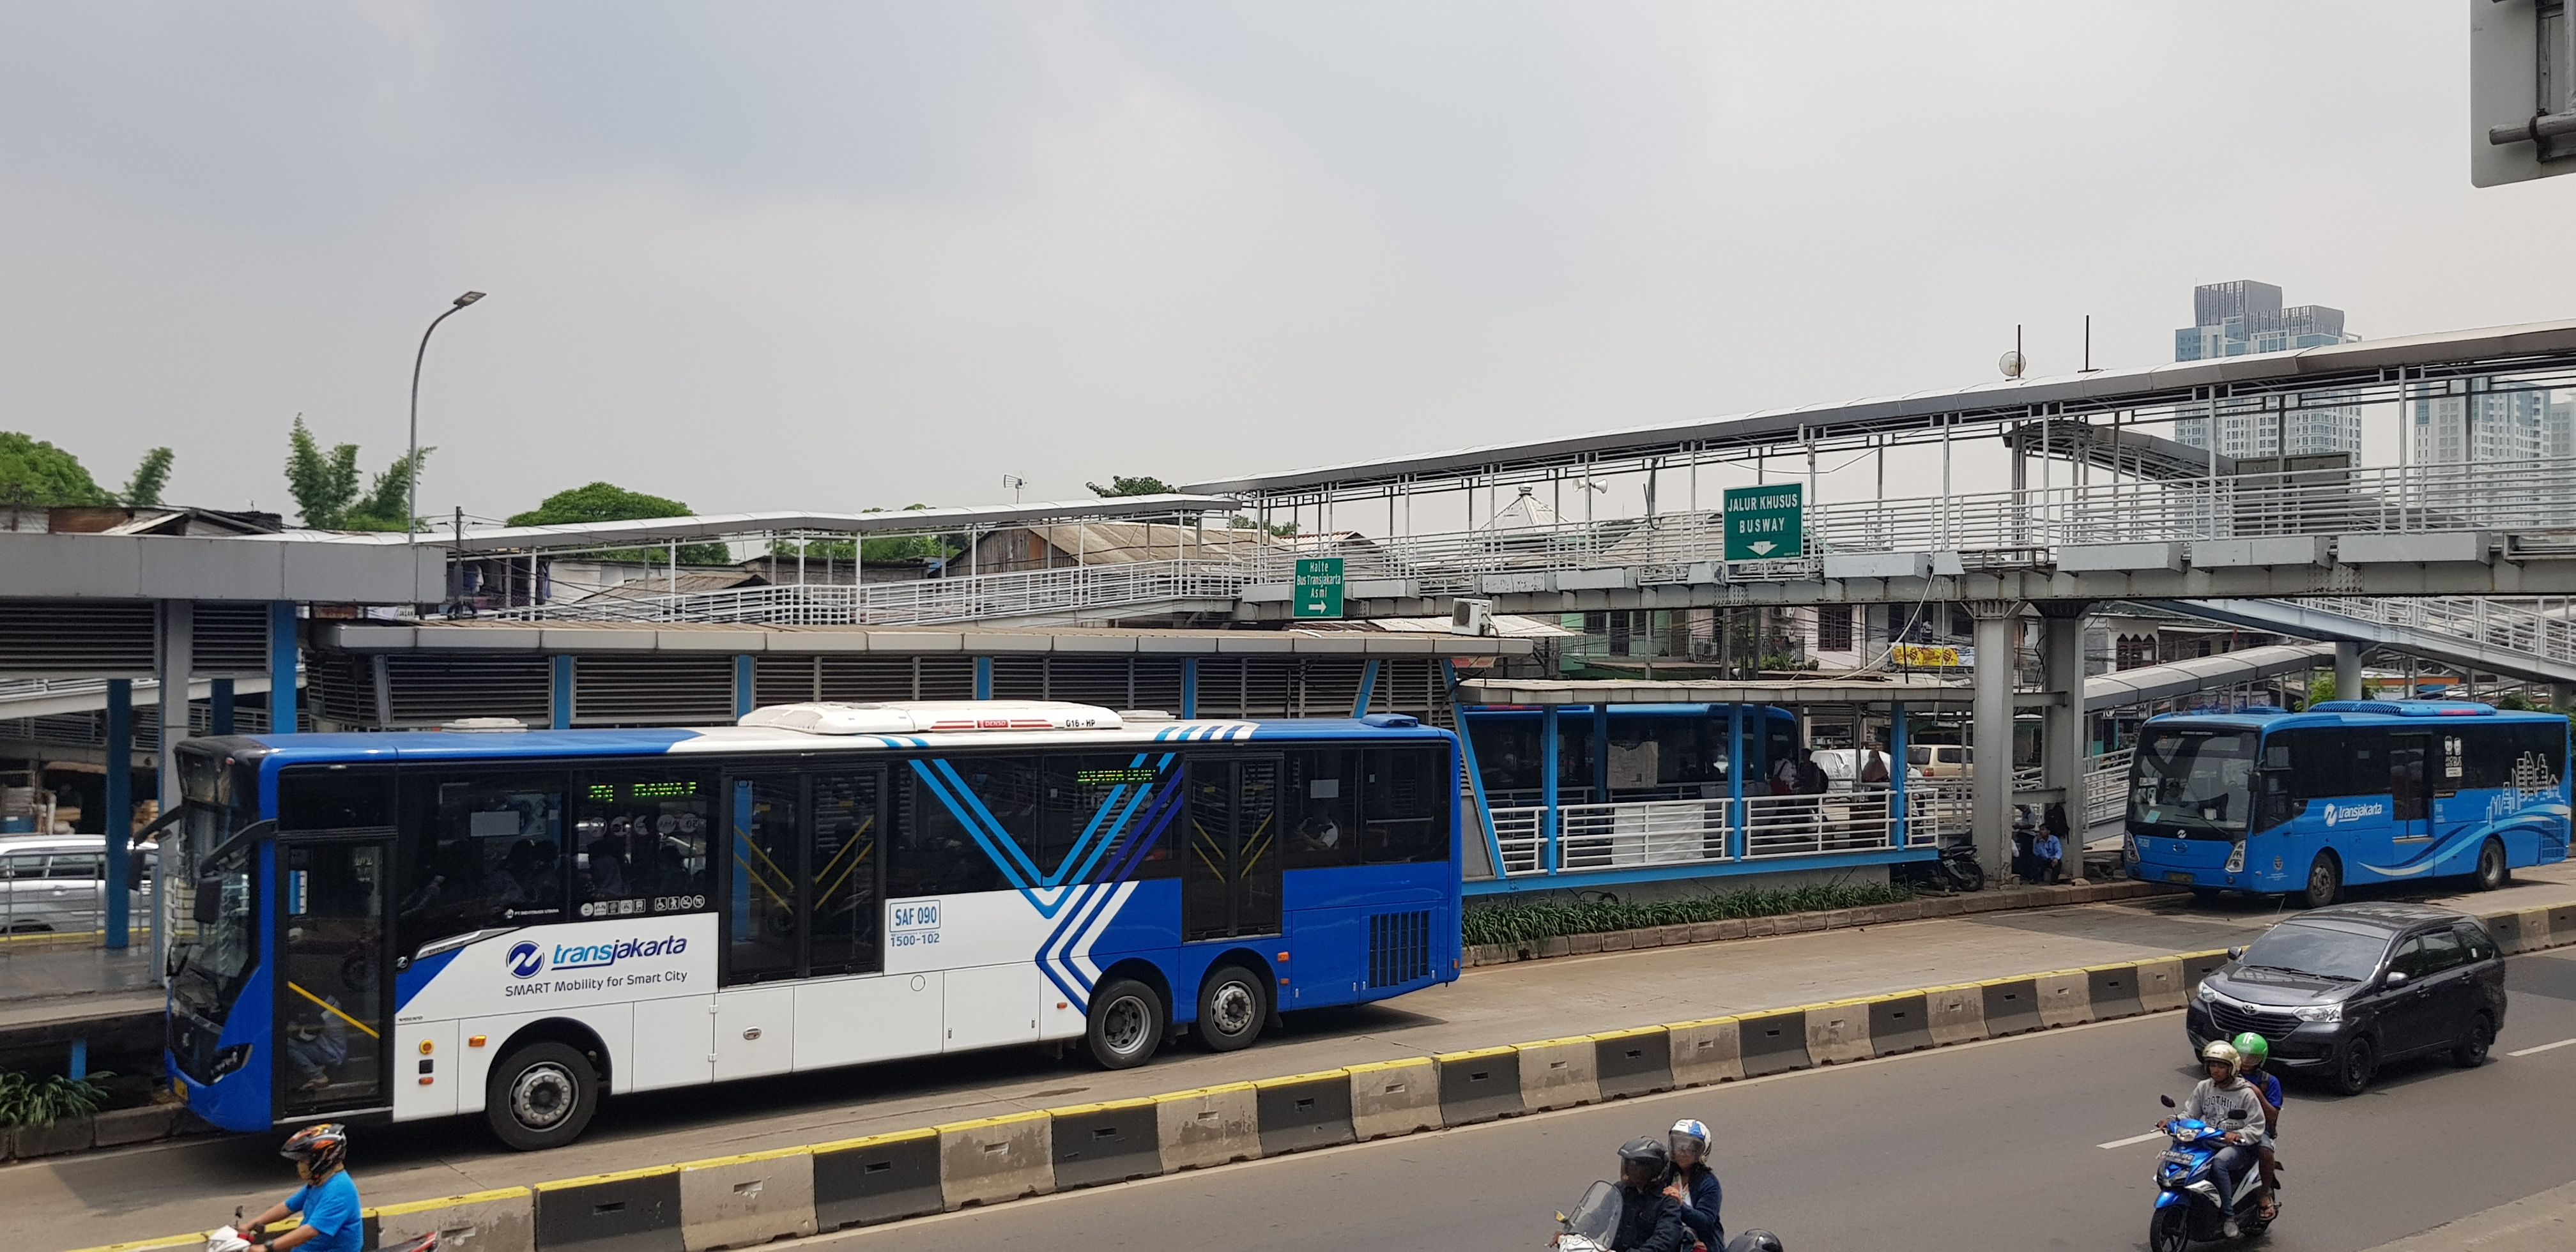 The Trans Jakarta Bus